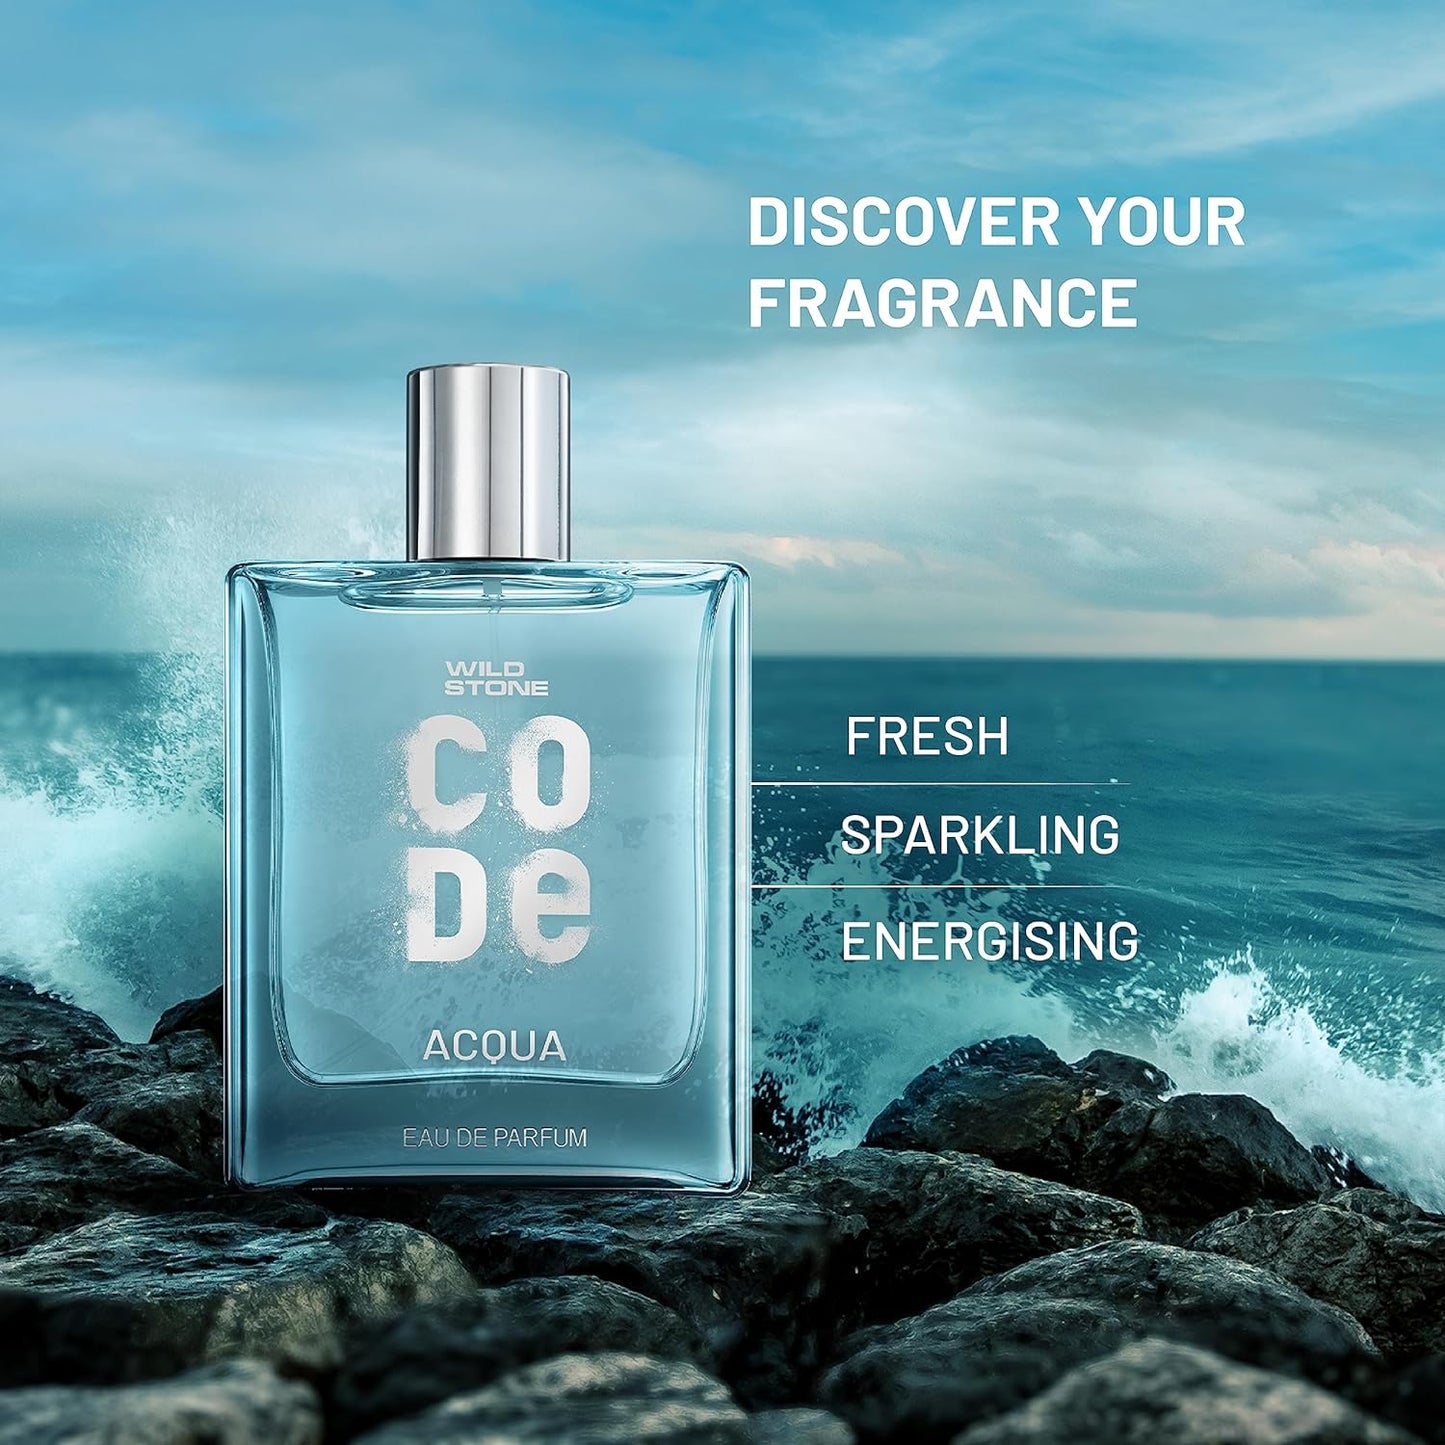 Summer Sensation Combo - Acqua Luxury Perfume & Hydrating Body Lotion